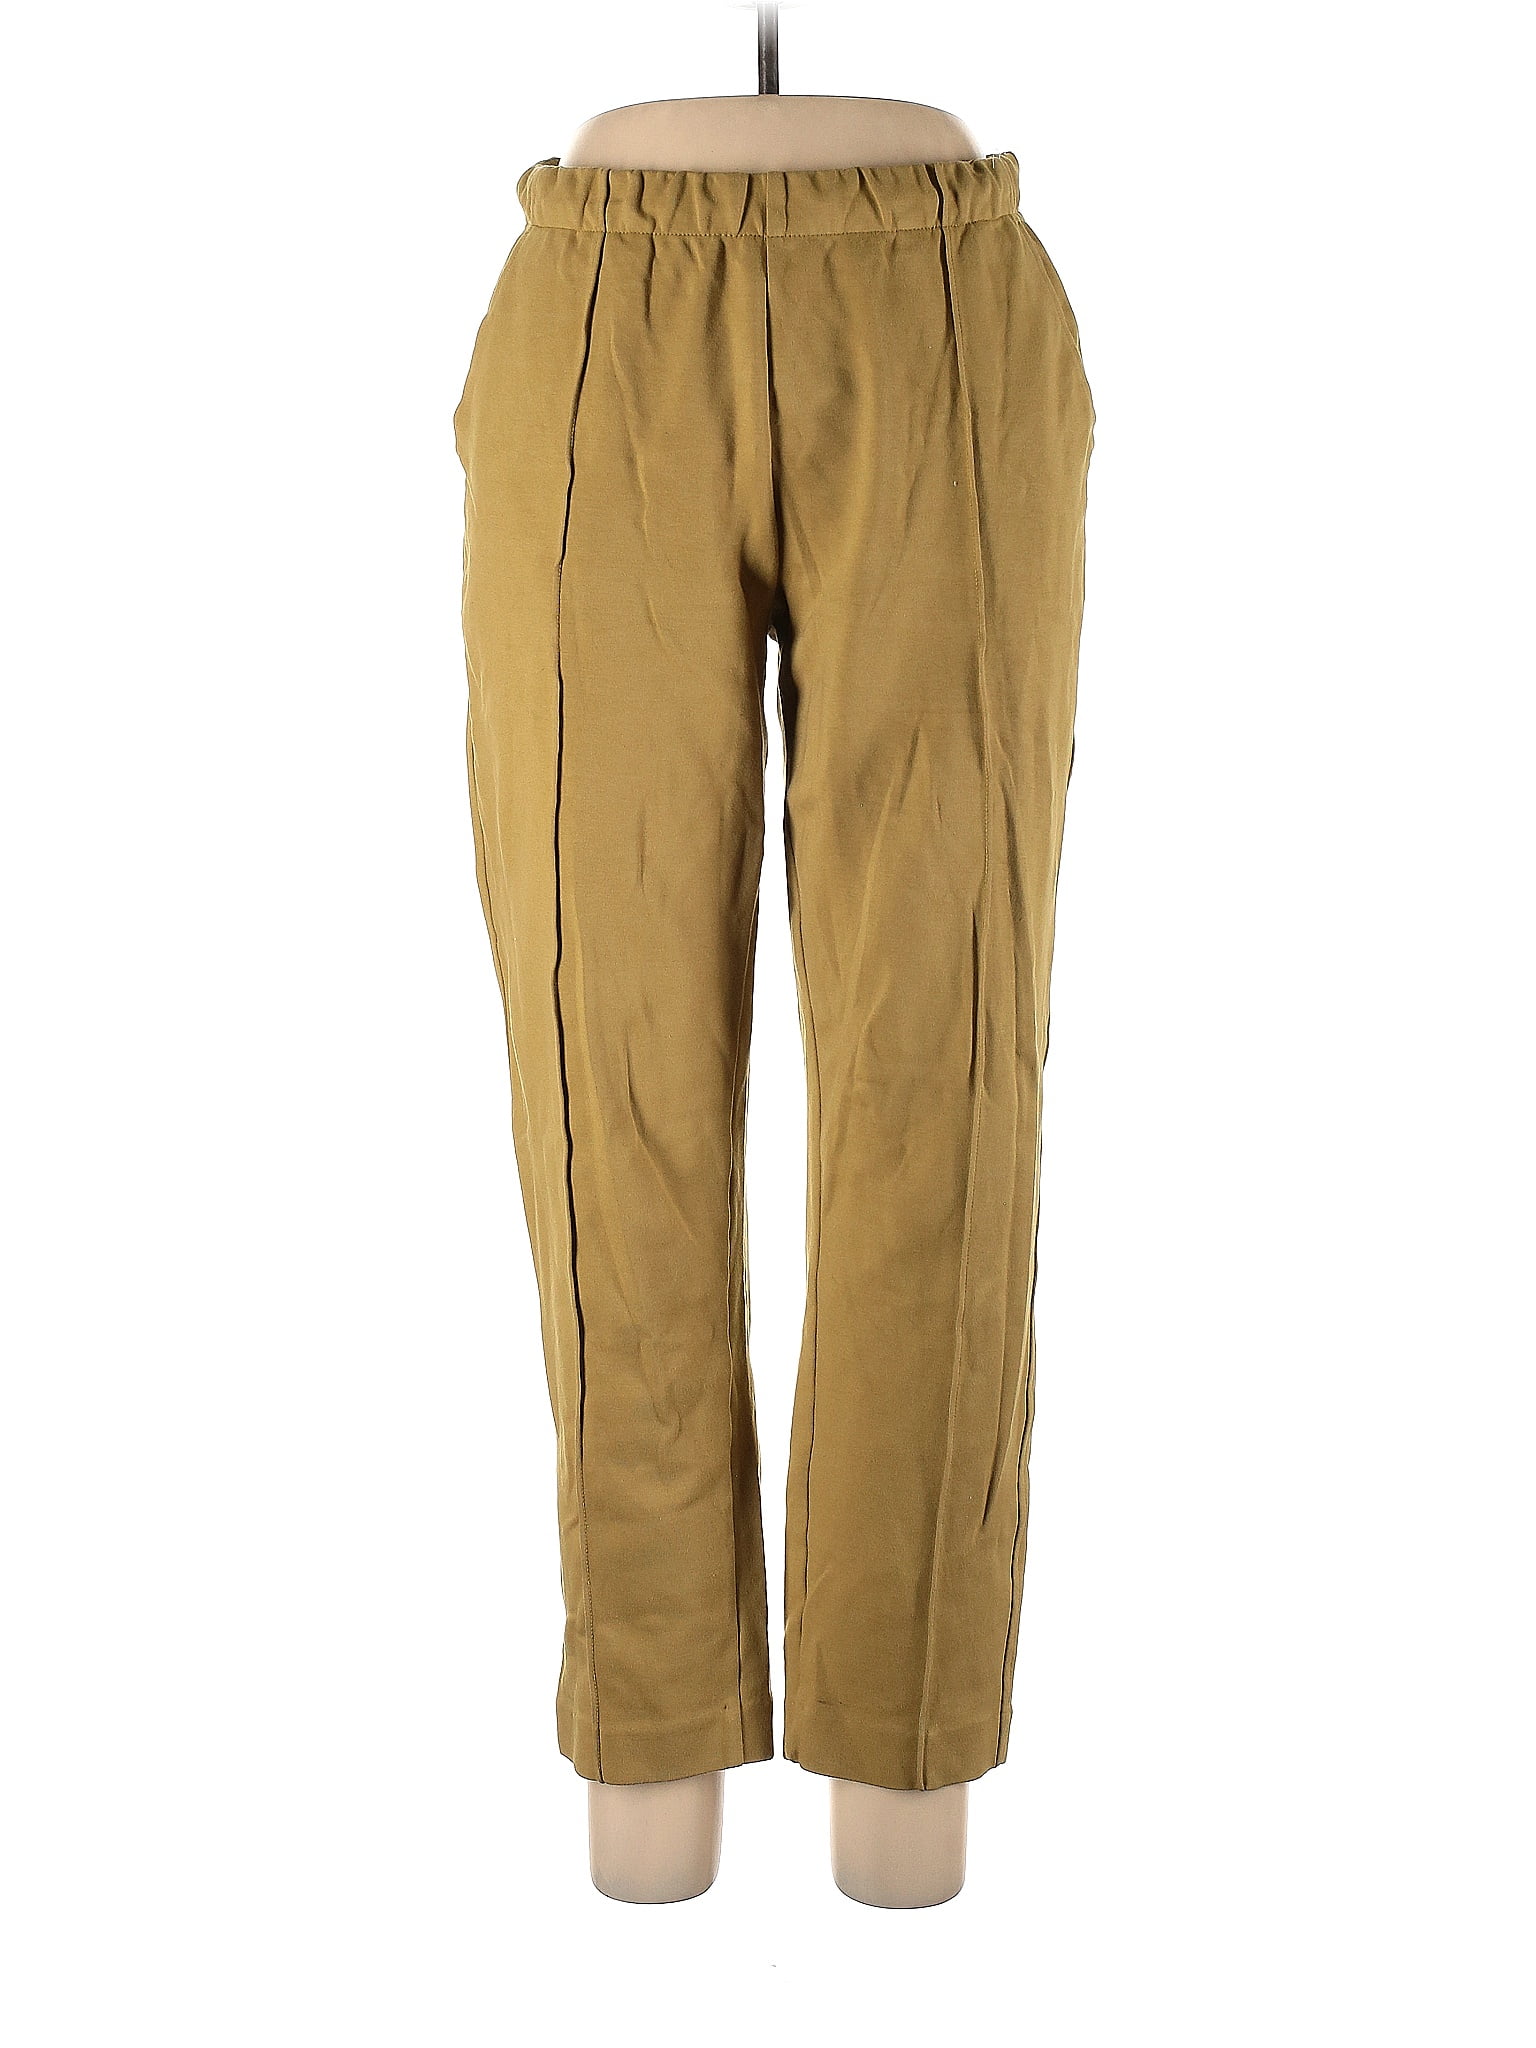 Everlane Solid Brown Sweatpants Size L - 47% off | thredUP